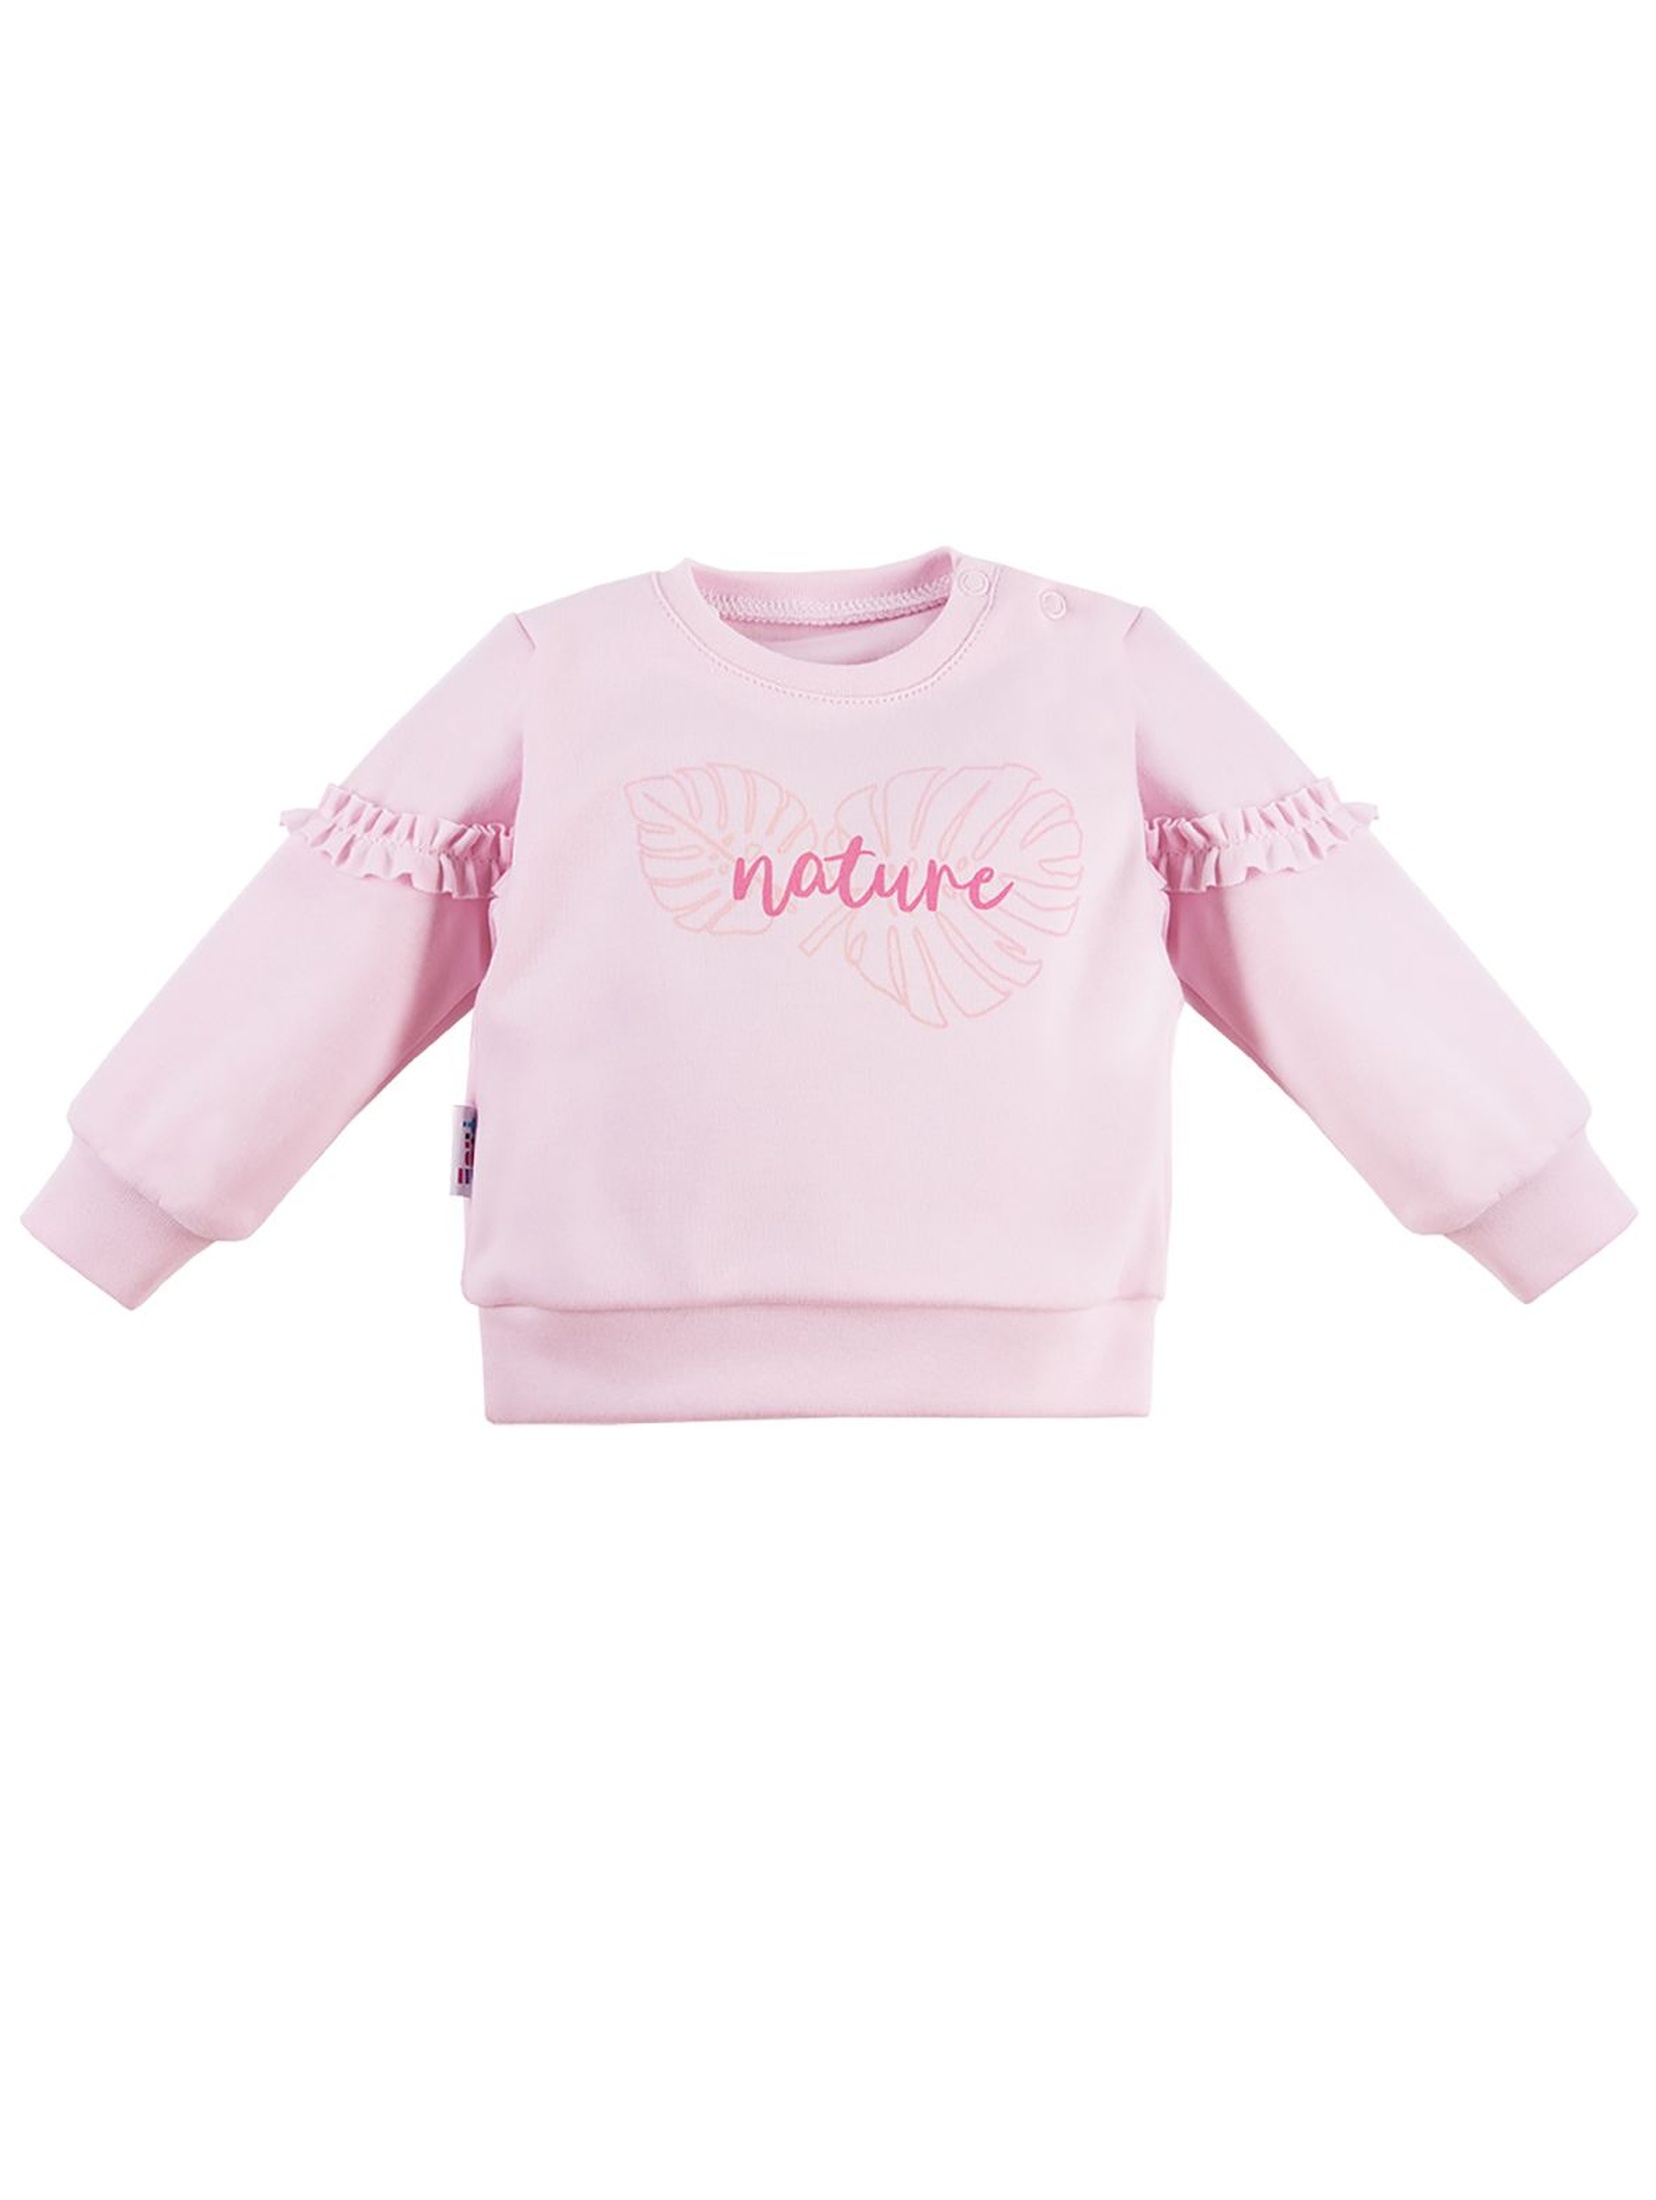 Bluza niemowlęca NATURE różowa